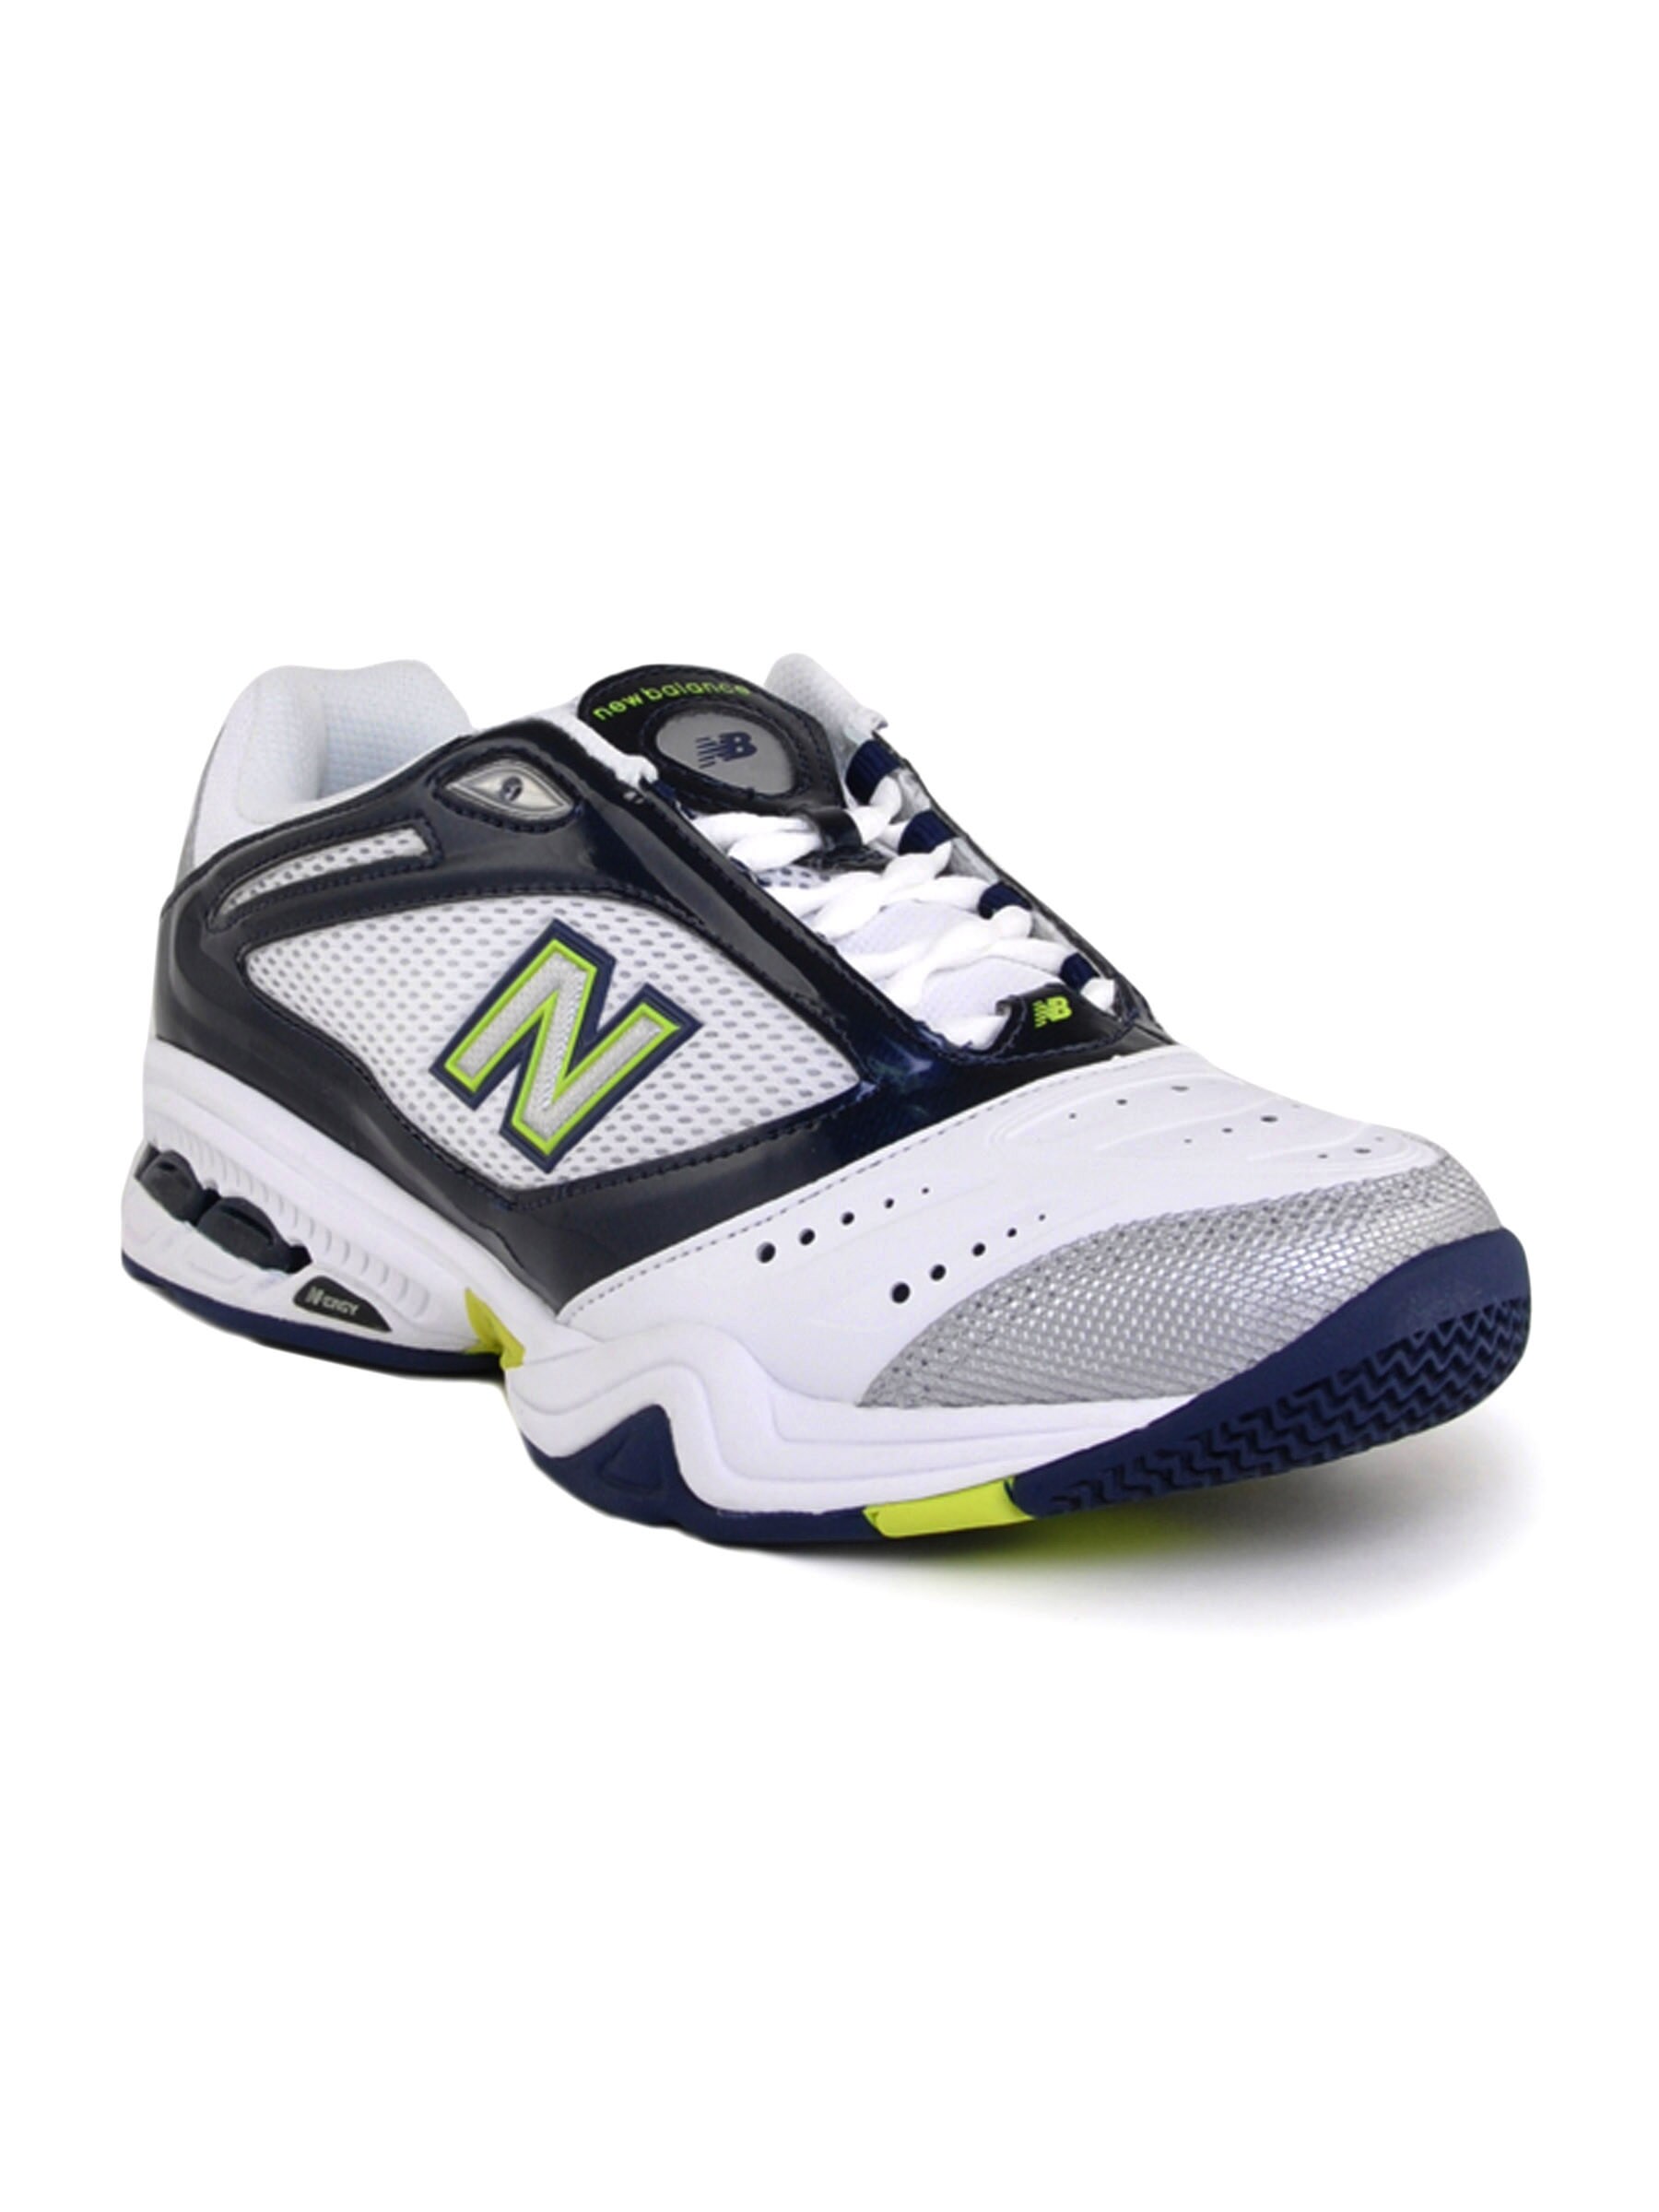 New Balance MC900 Men Others Tennis White Sports Shoes